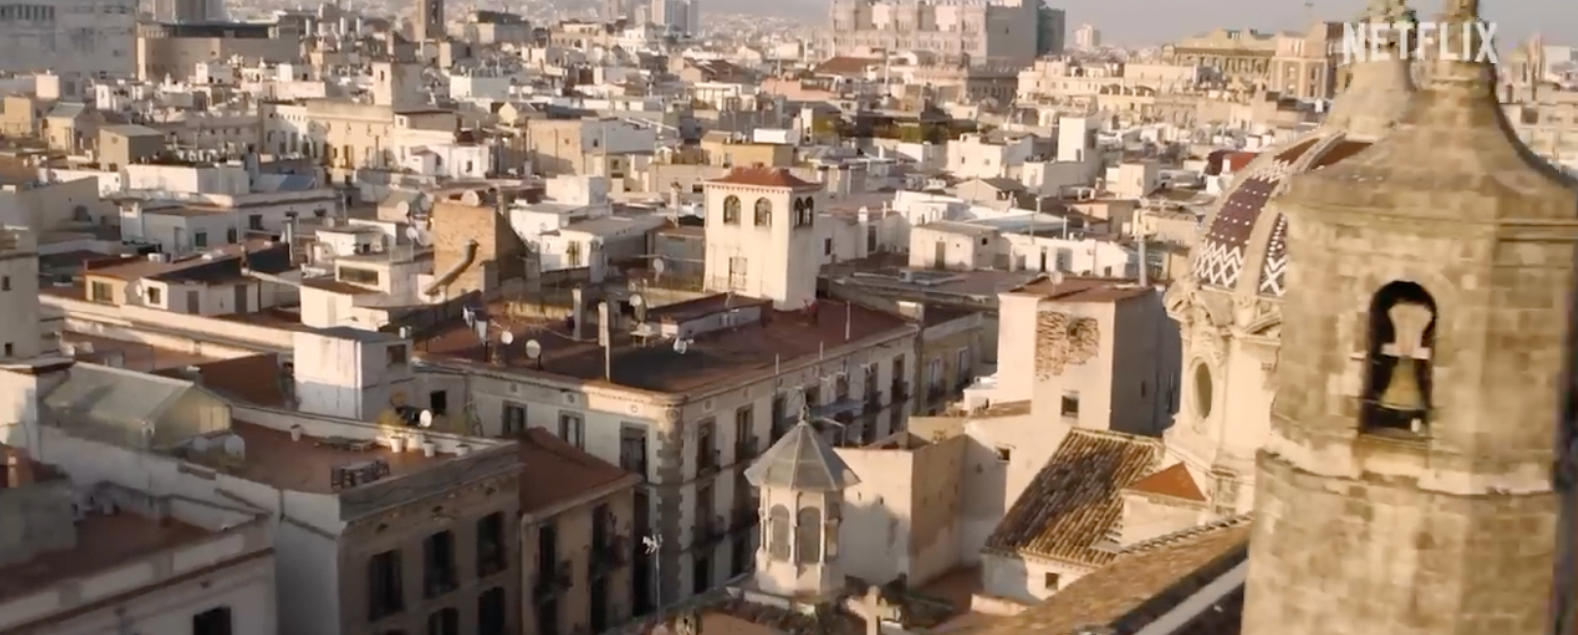 Трейлер фильма "Птичий короб: Барселона"